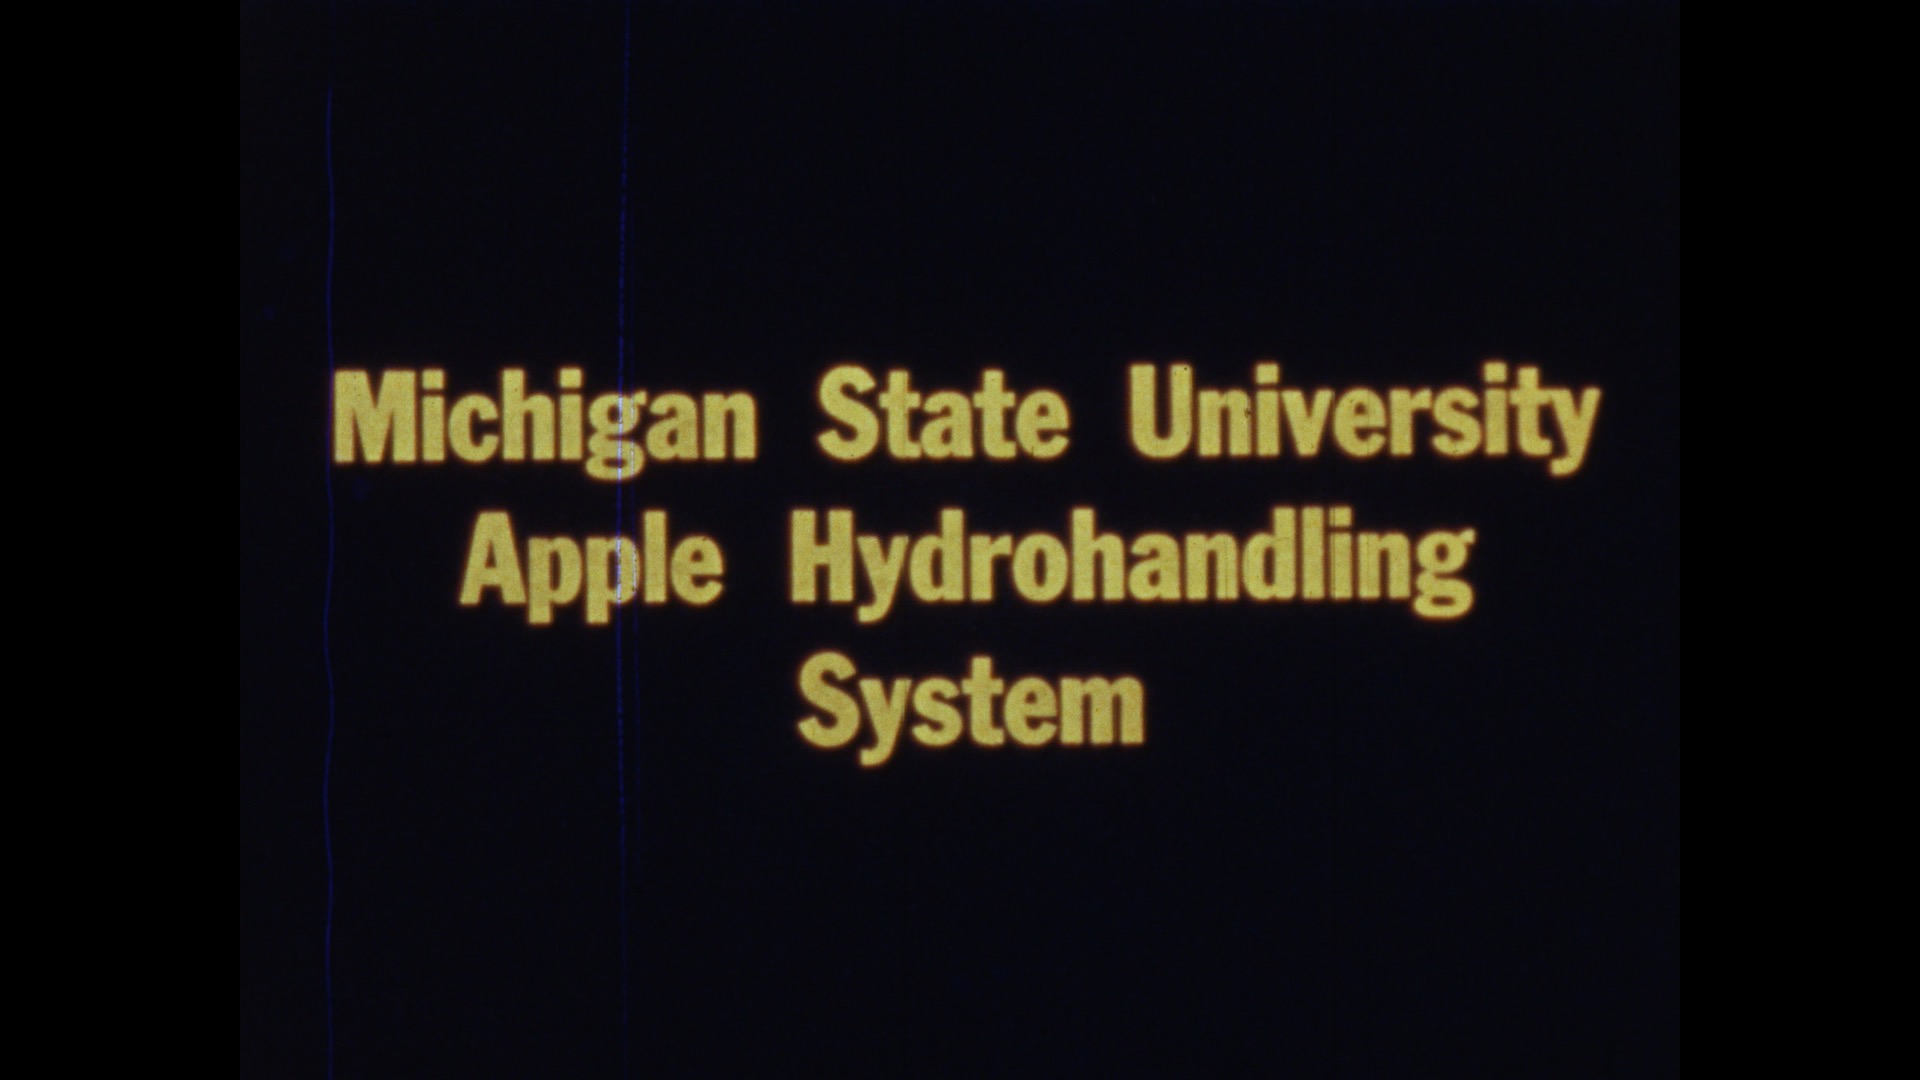 MSU Apple Hydrohandling System, 1966